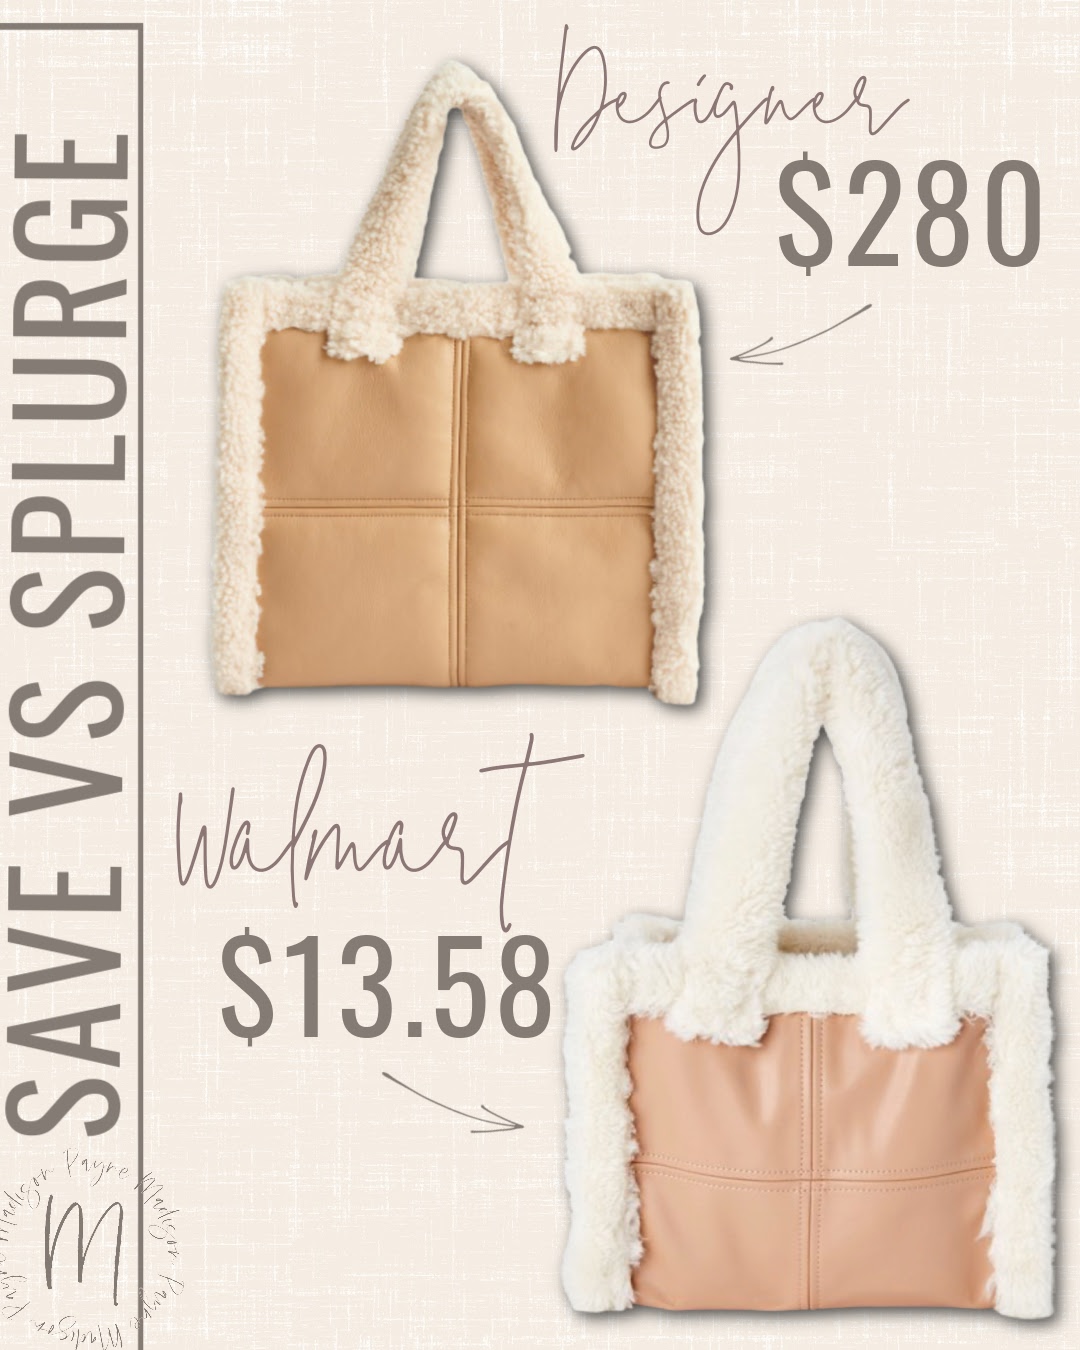 Louis Vuitton inspired bag from Walmart part 3 #dupe #handbags